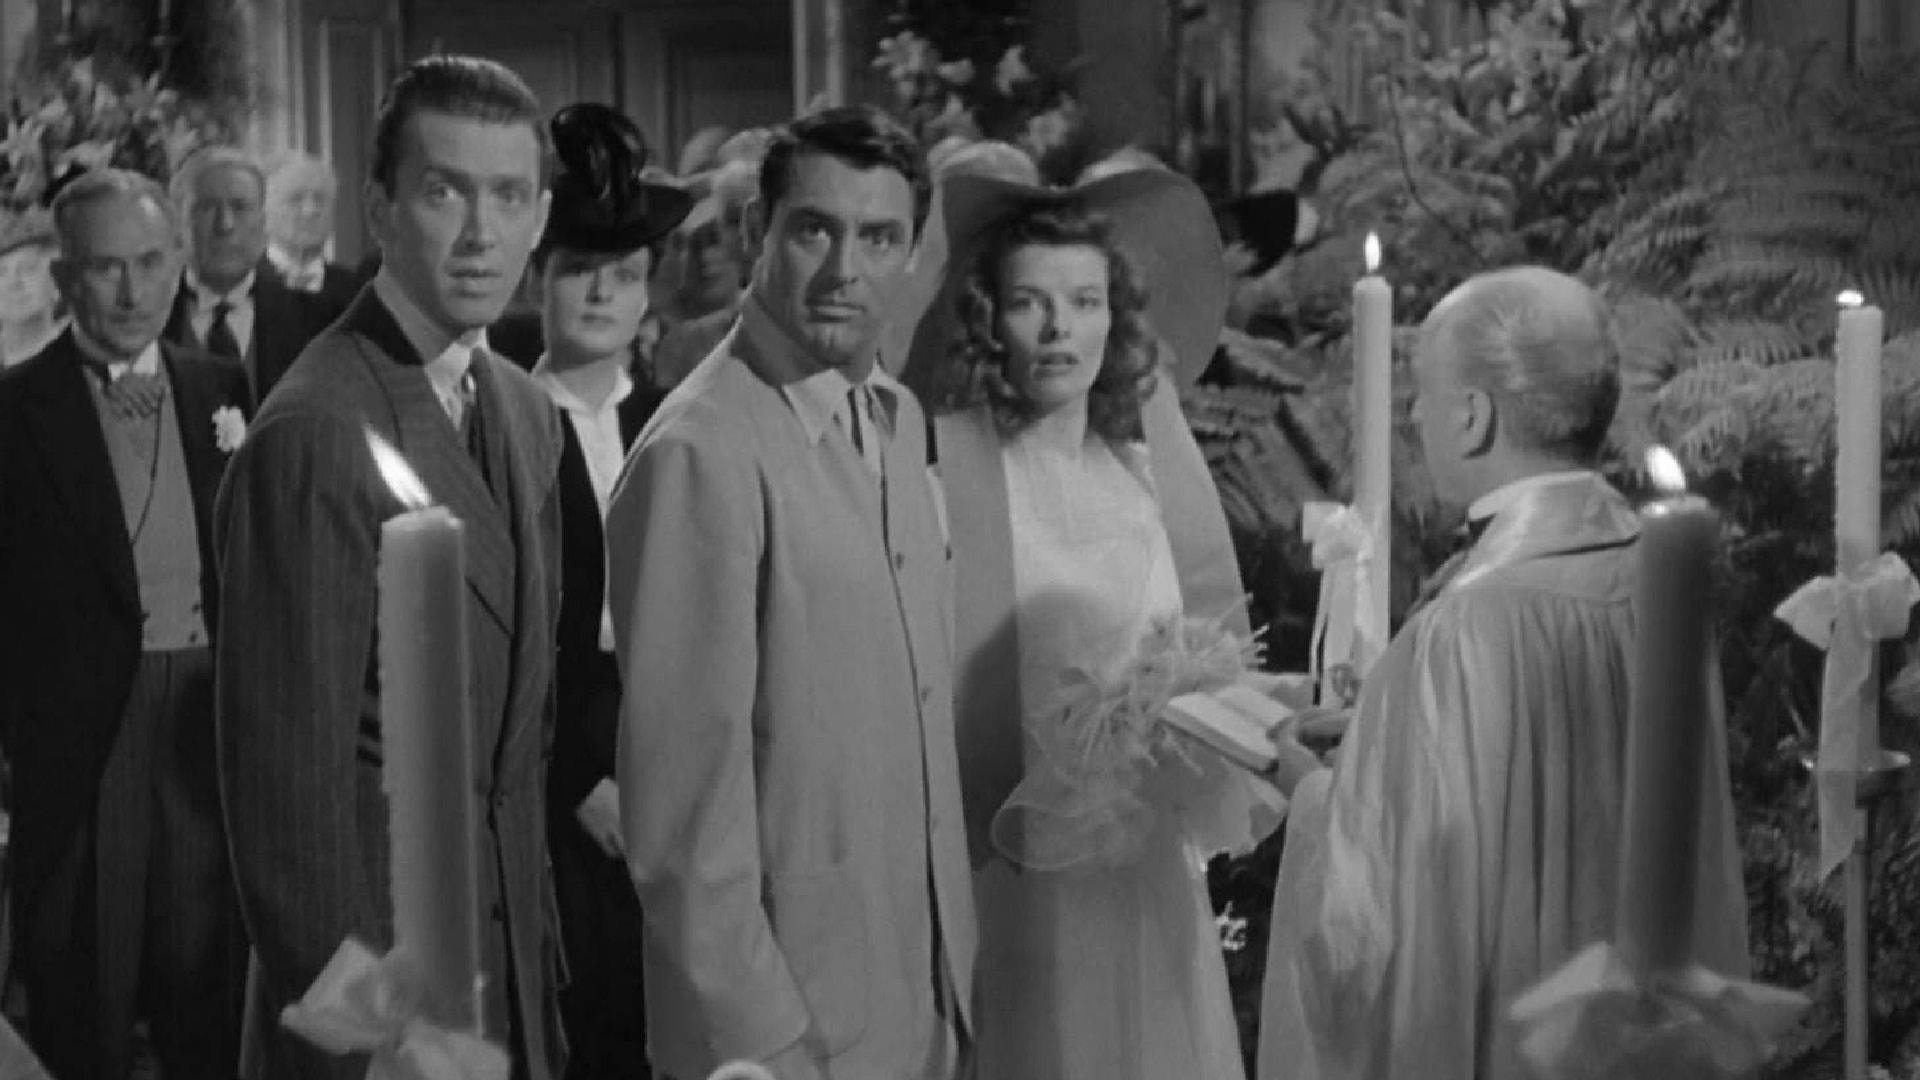 THE PHILADELPHIA STORY film still of Cary Grant and Katharine Hepburn